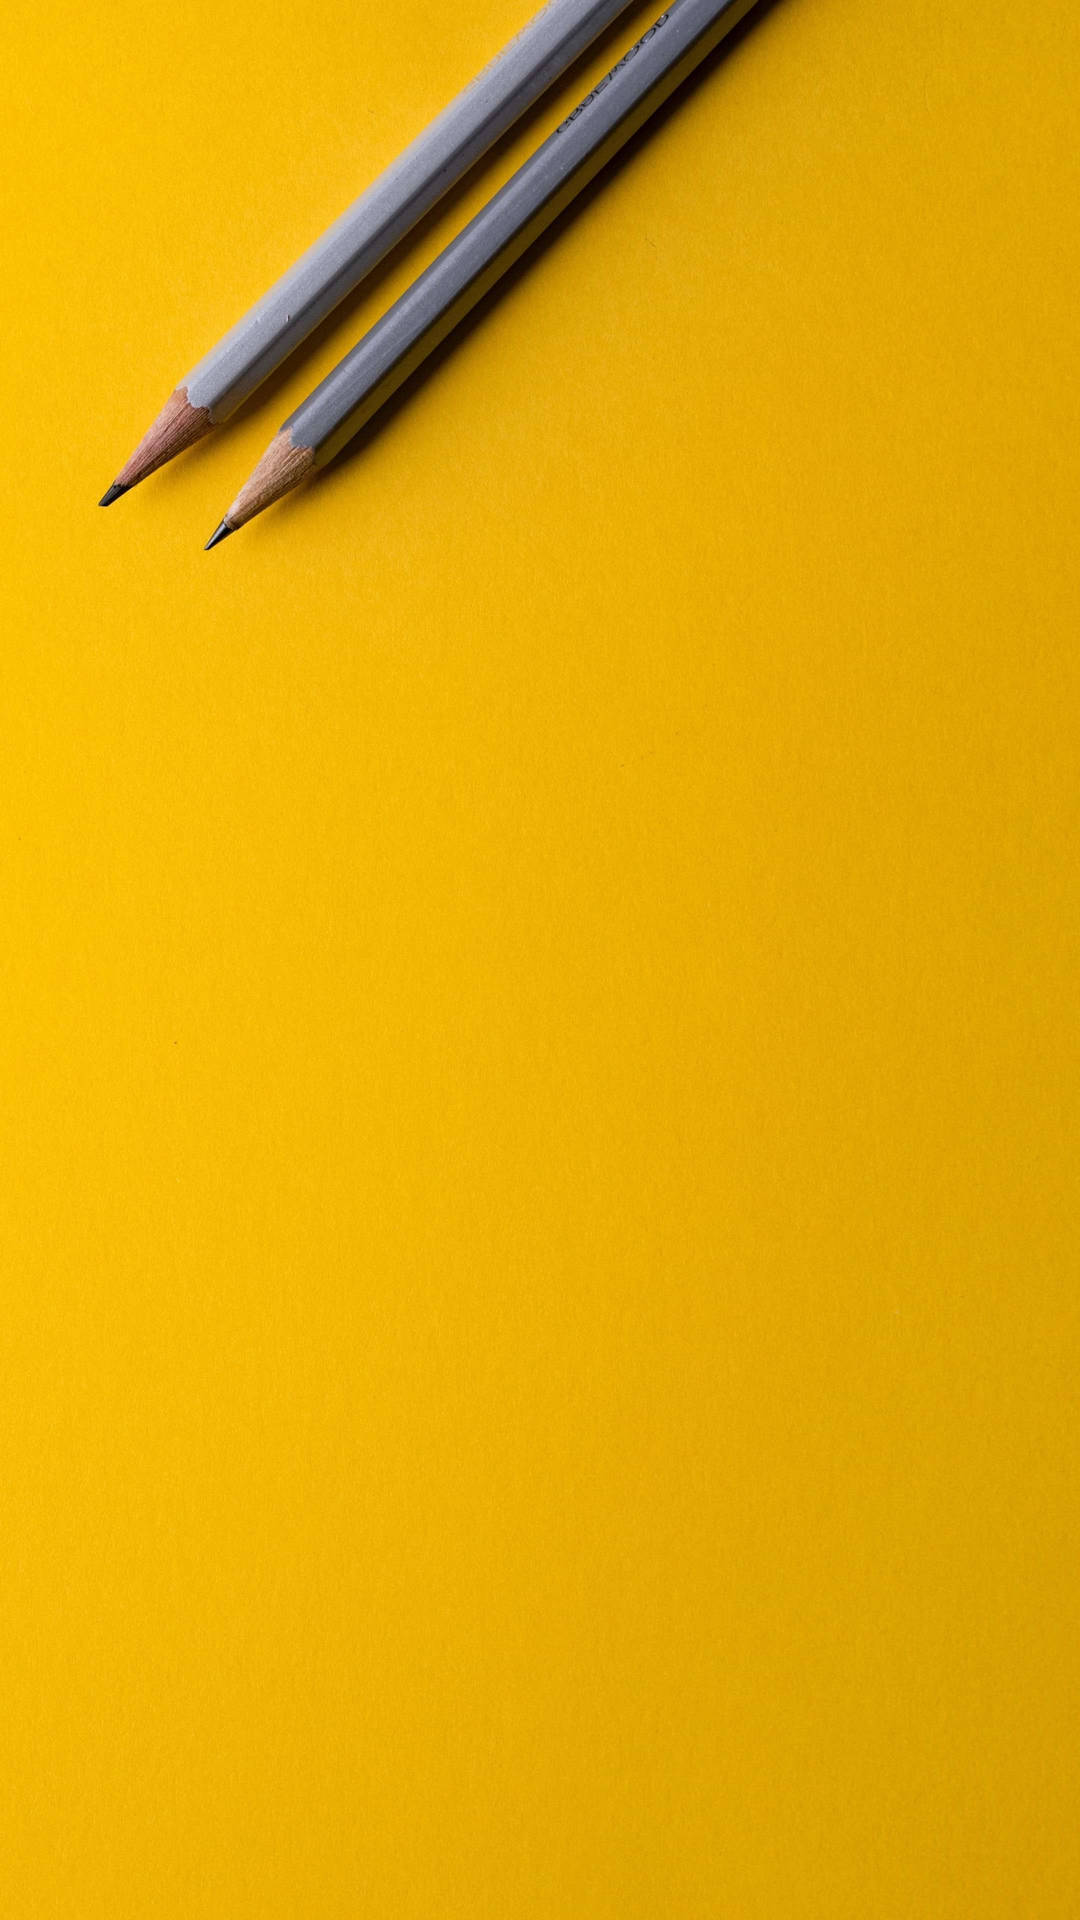 Pencils Minimalist Phone Background